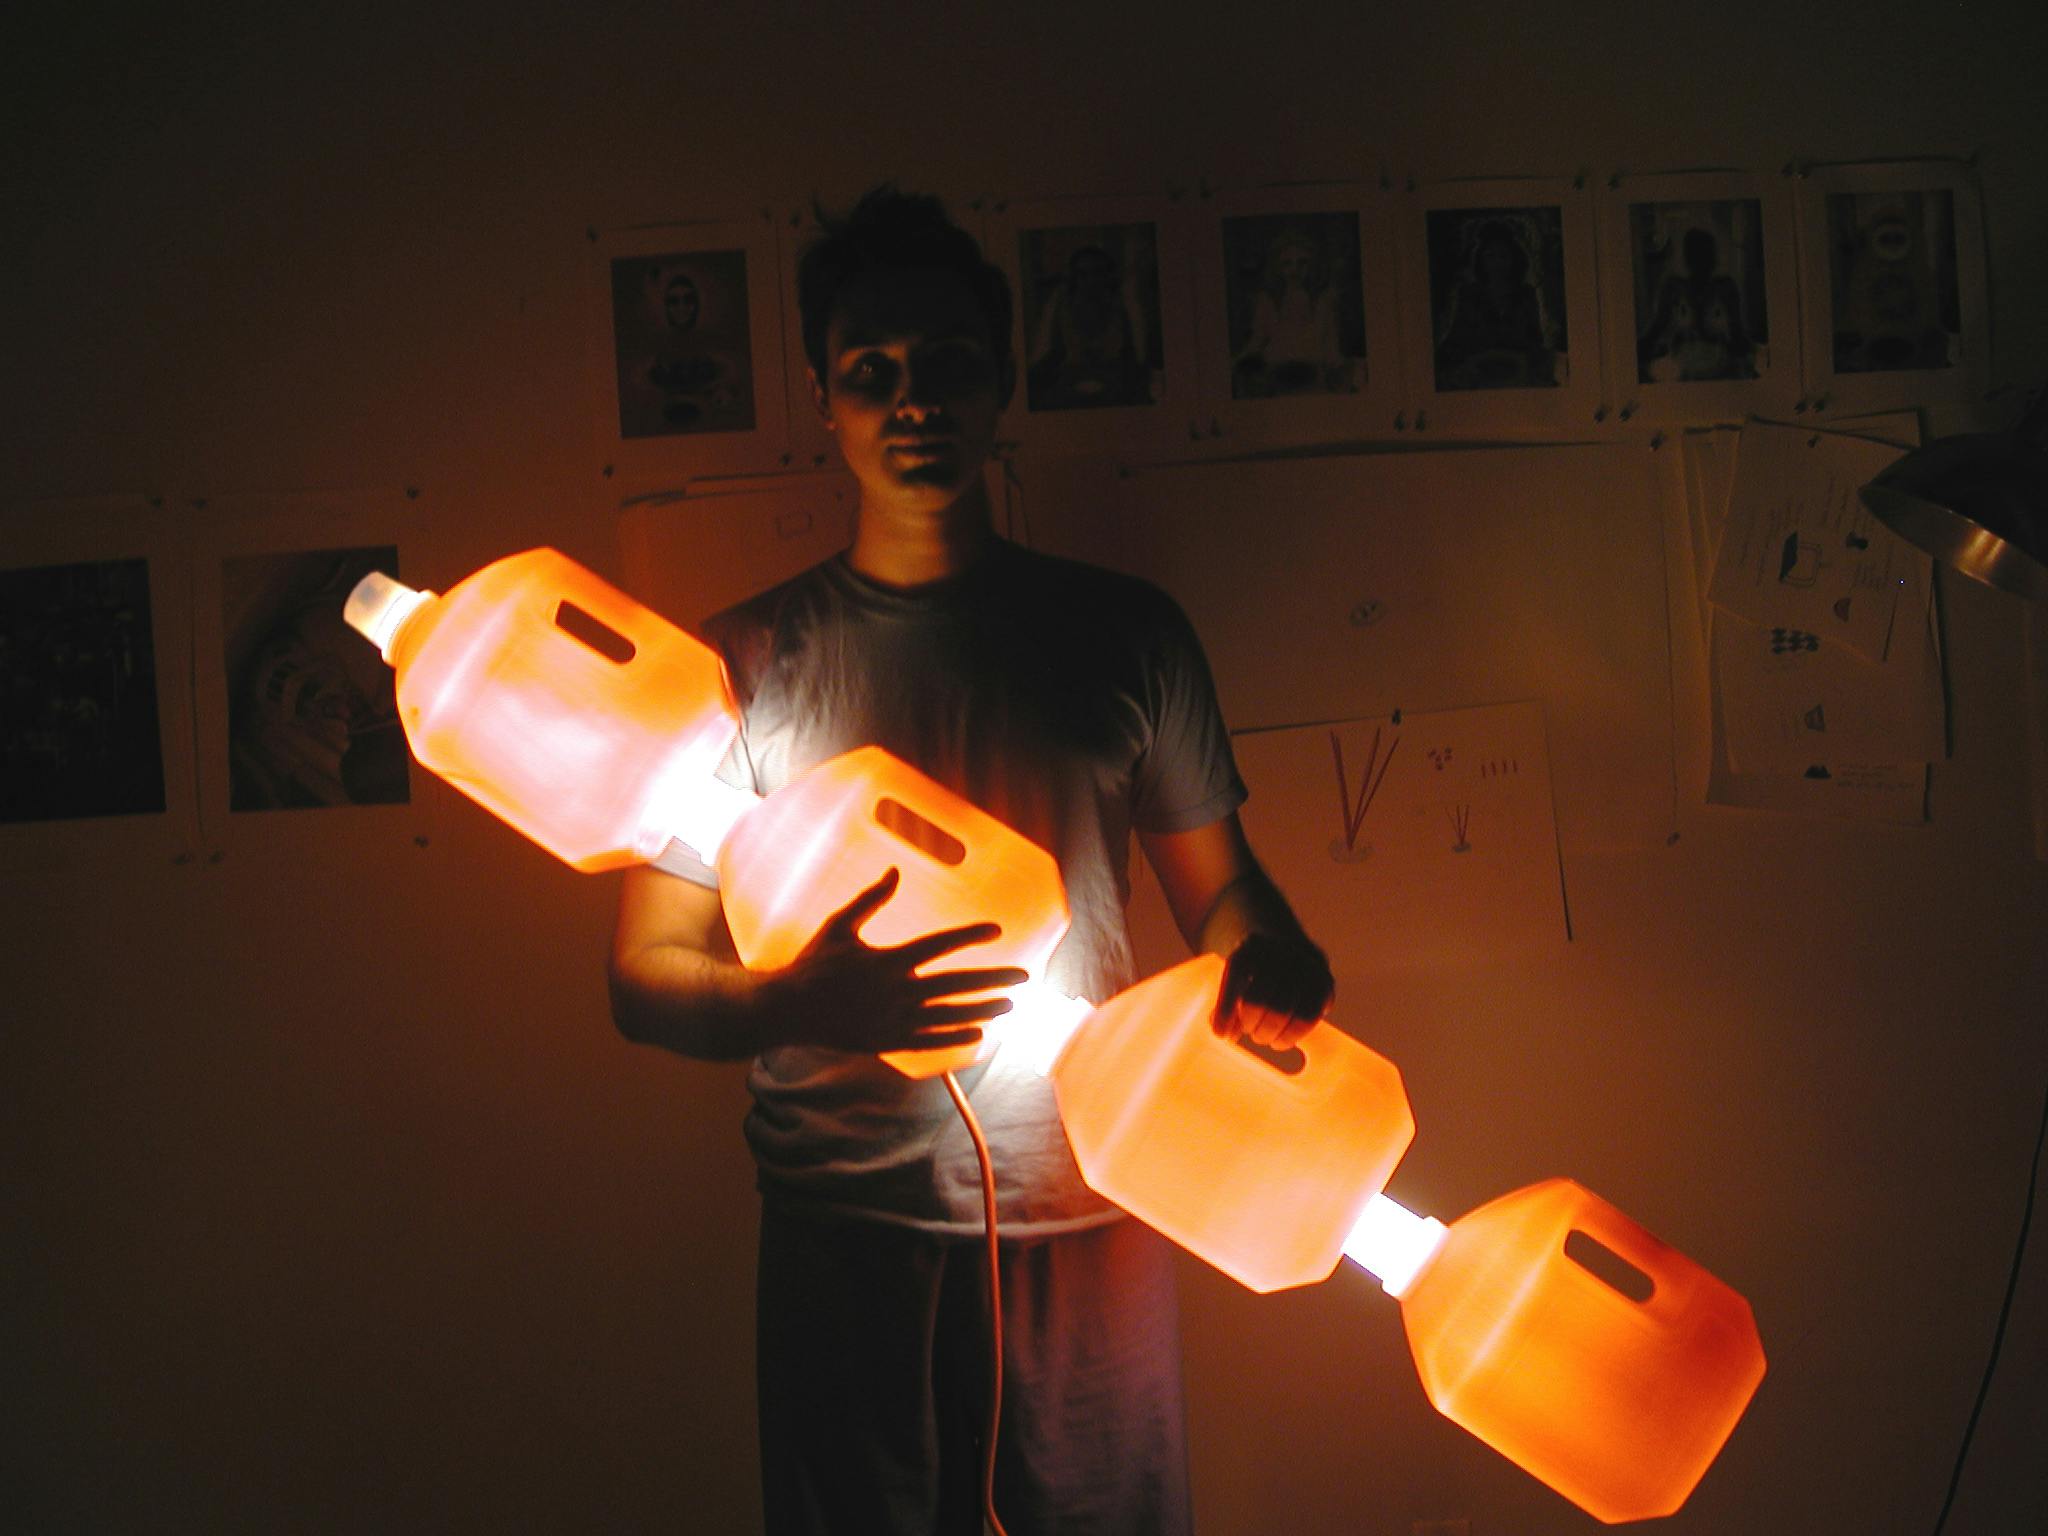 Man holding illuminated plastic jugs